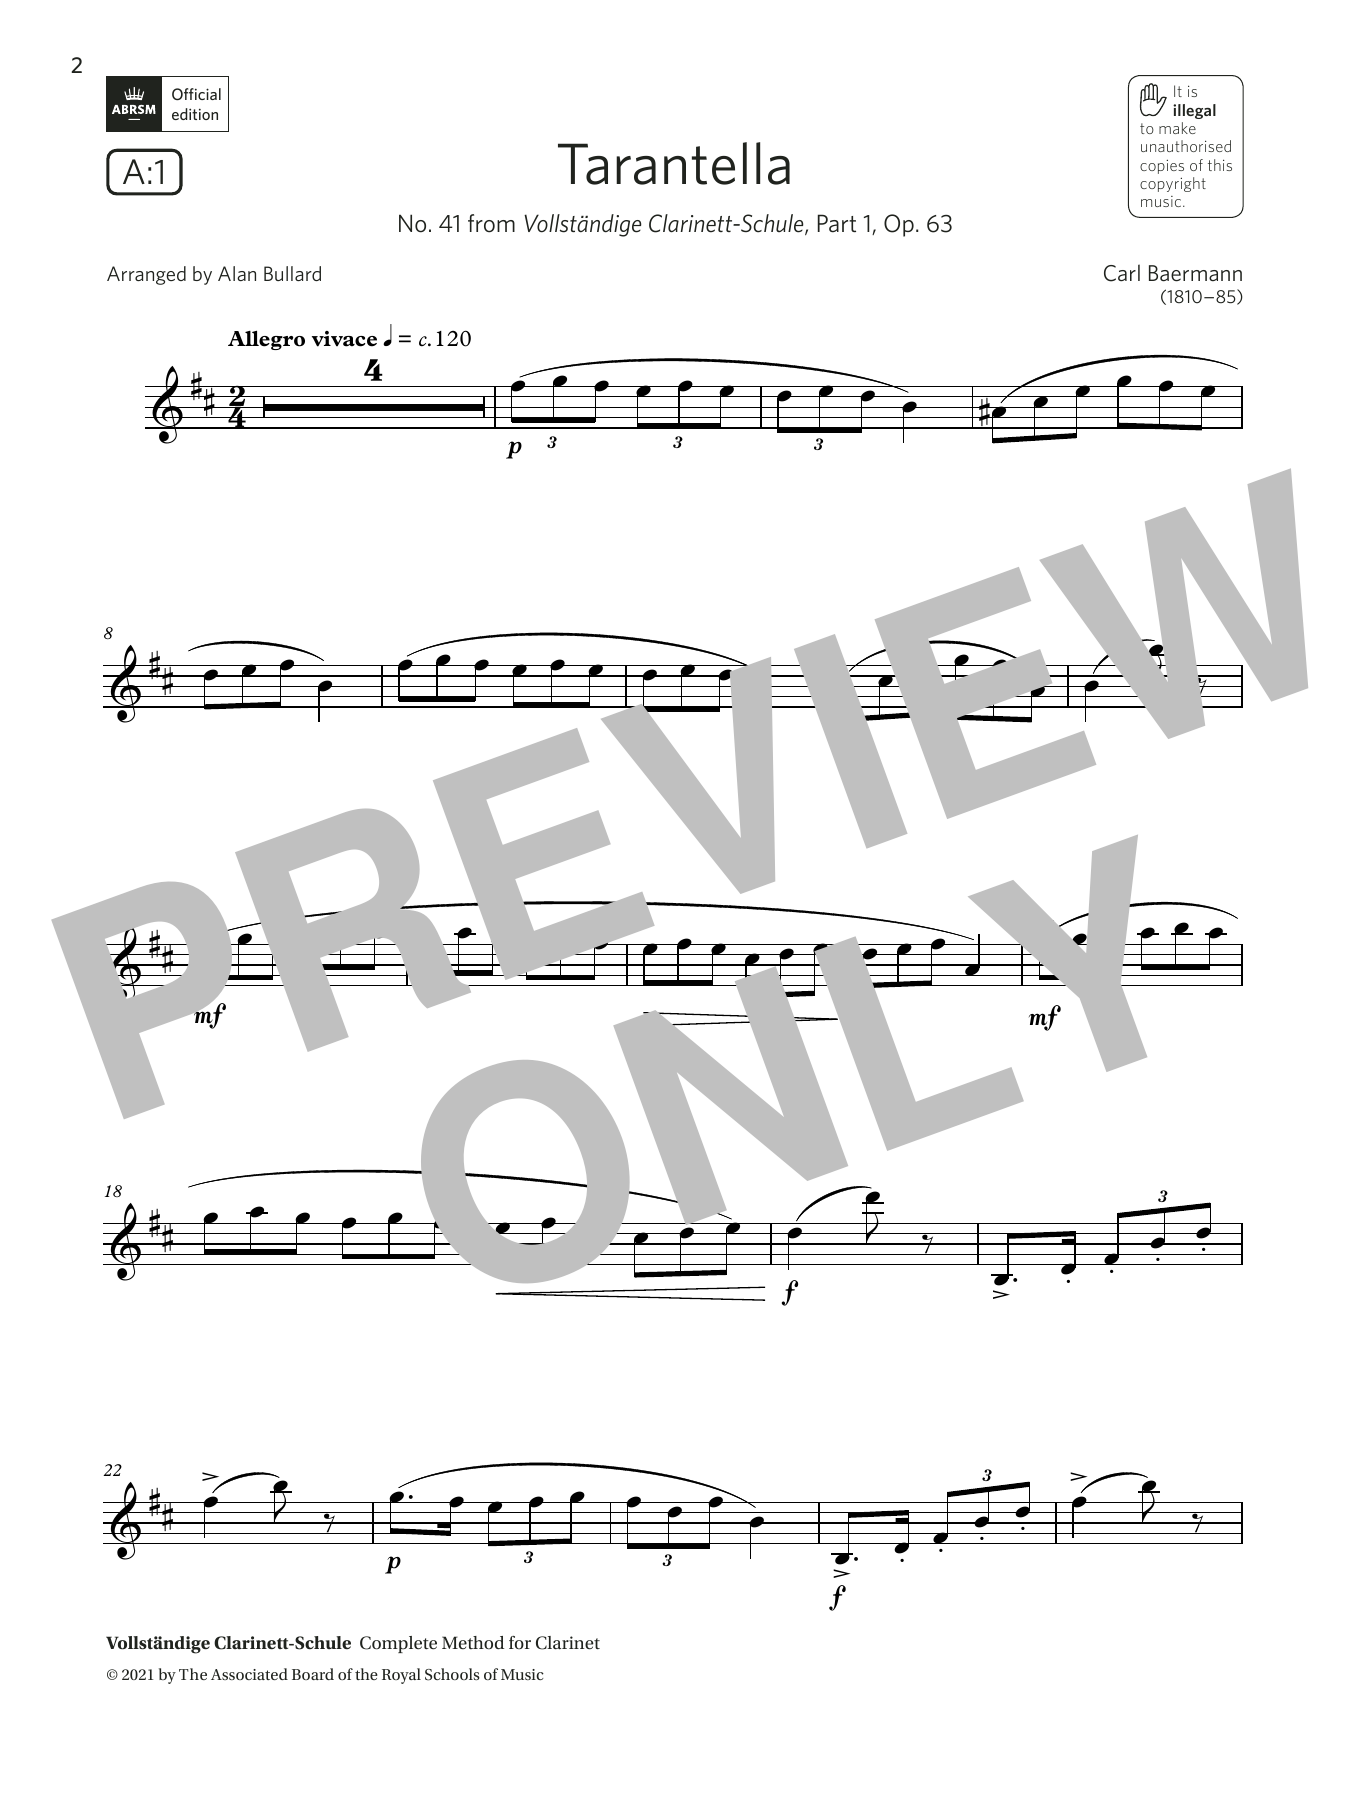 Carl Baermann Tarantella (from Vollständige Clarinett-Schule)(Grade 5 A1, the ABRSM Saxophone syllabus from 2022) Sheet Music Notes & Chords for Alto Sax Solo - Download or Print PDF